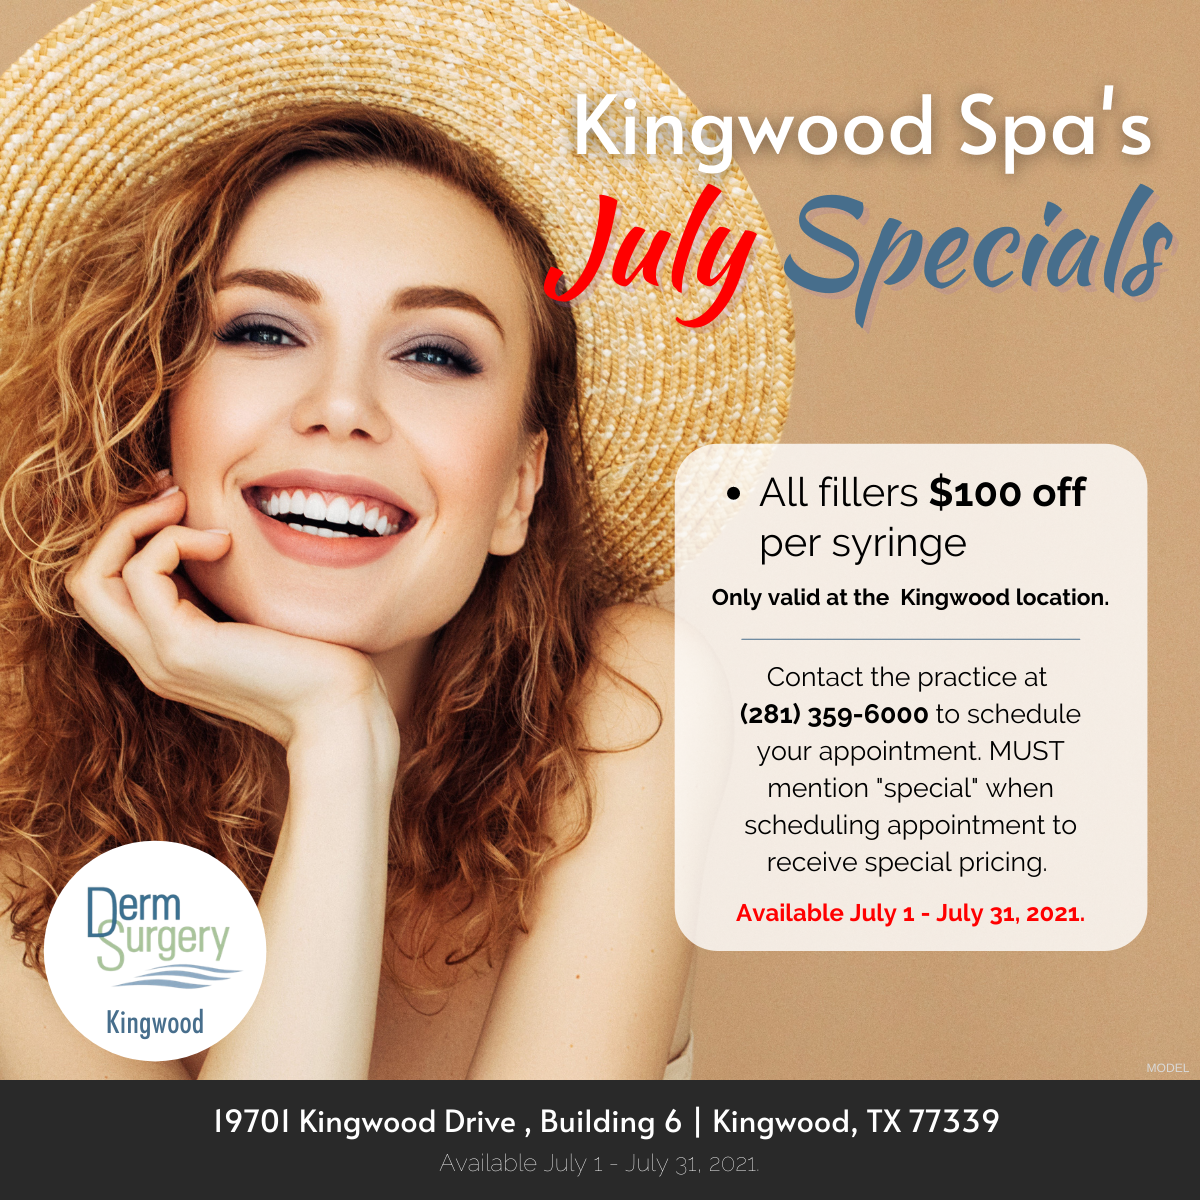 Kingwood Spa's July Specials